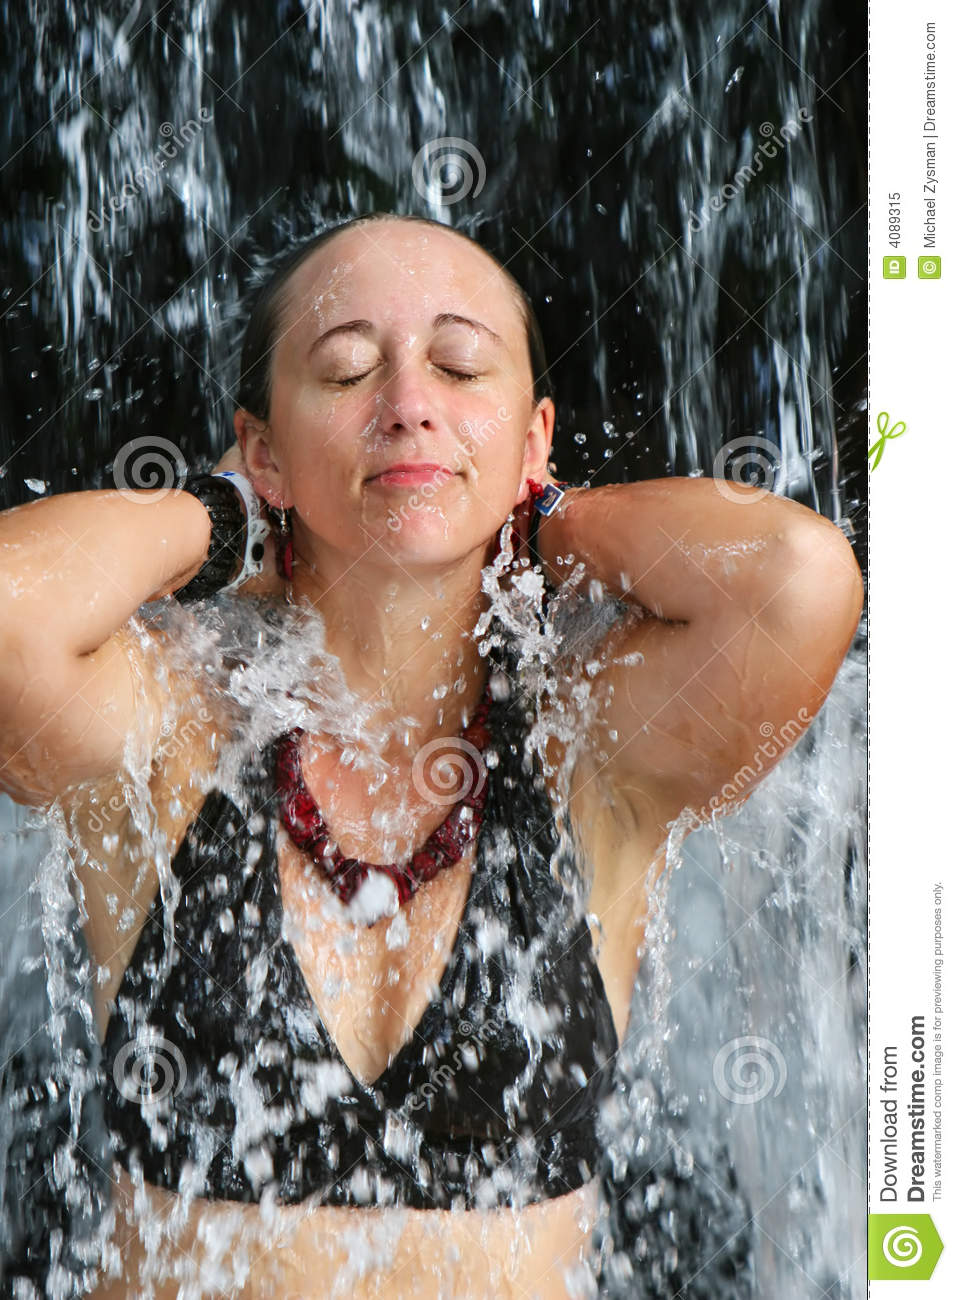 girl-under-relaxing-waterfall-4089315.jpg